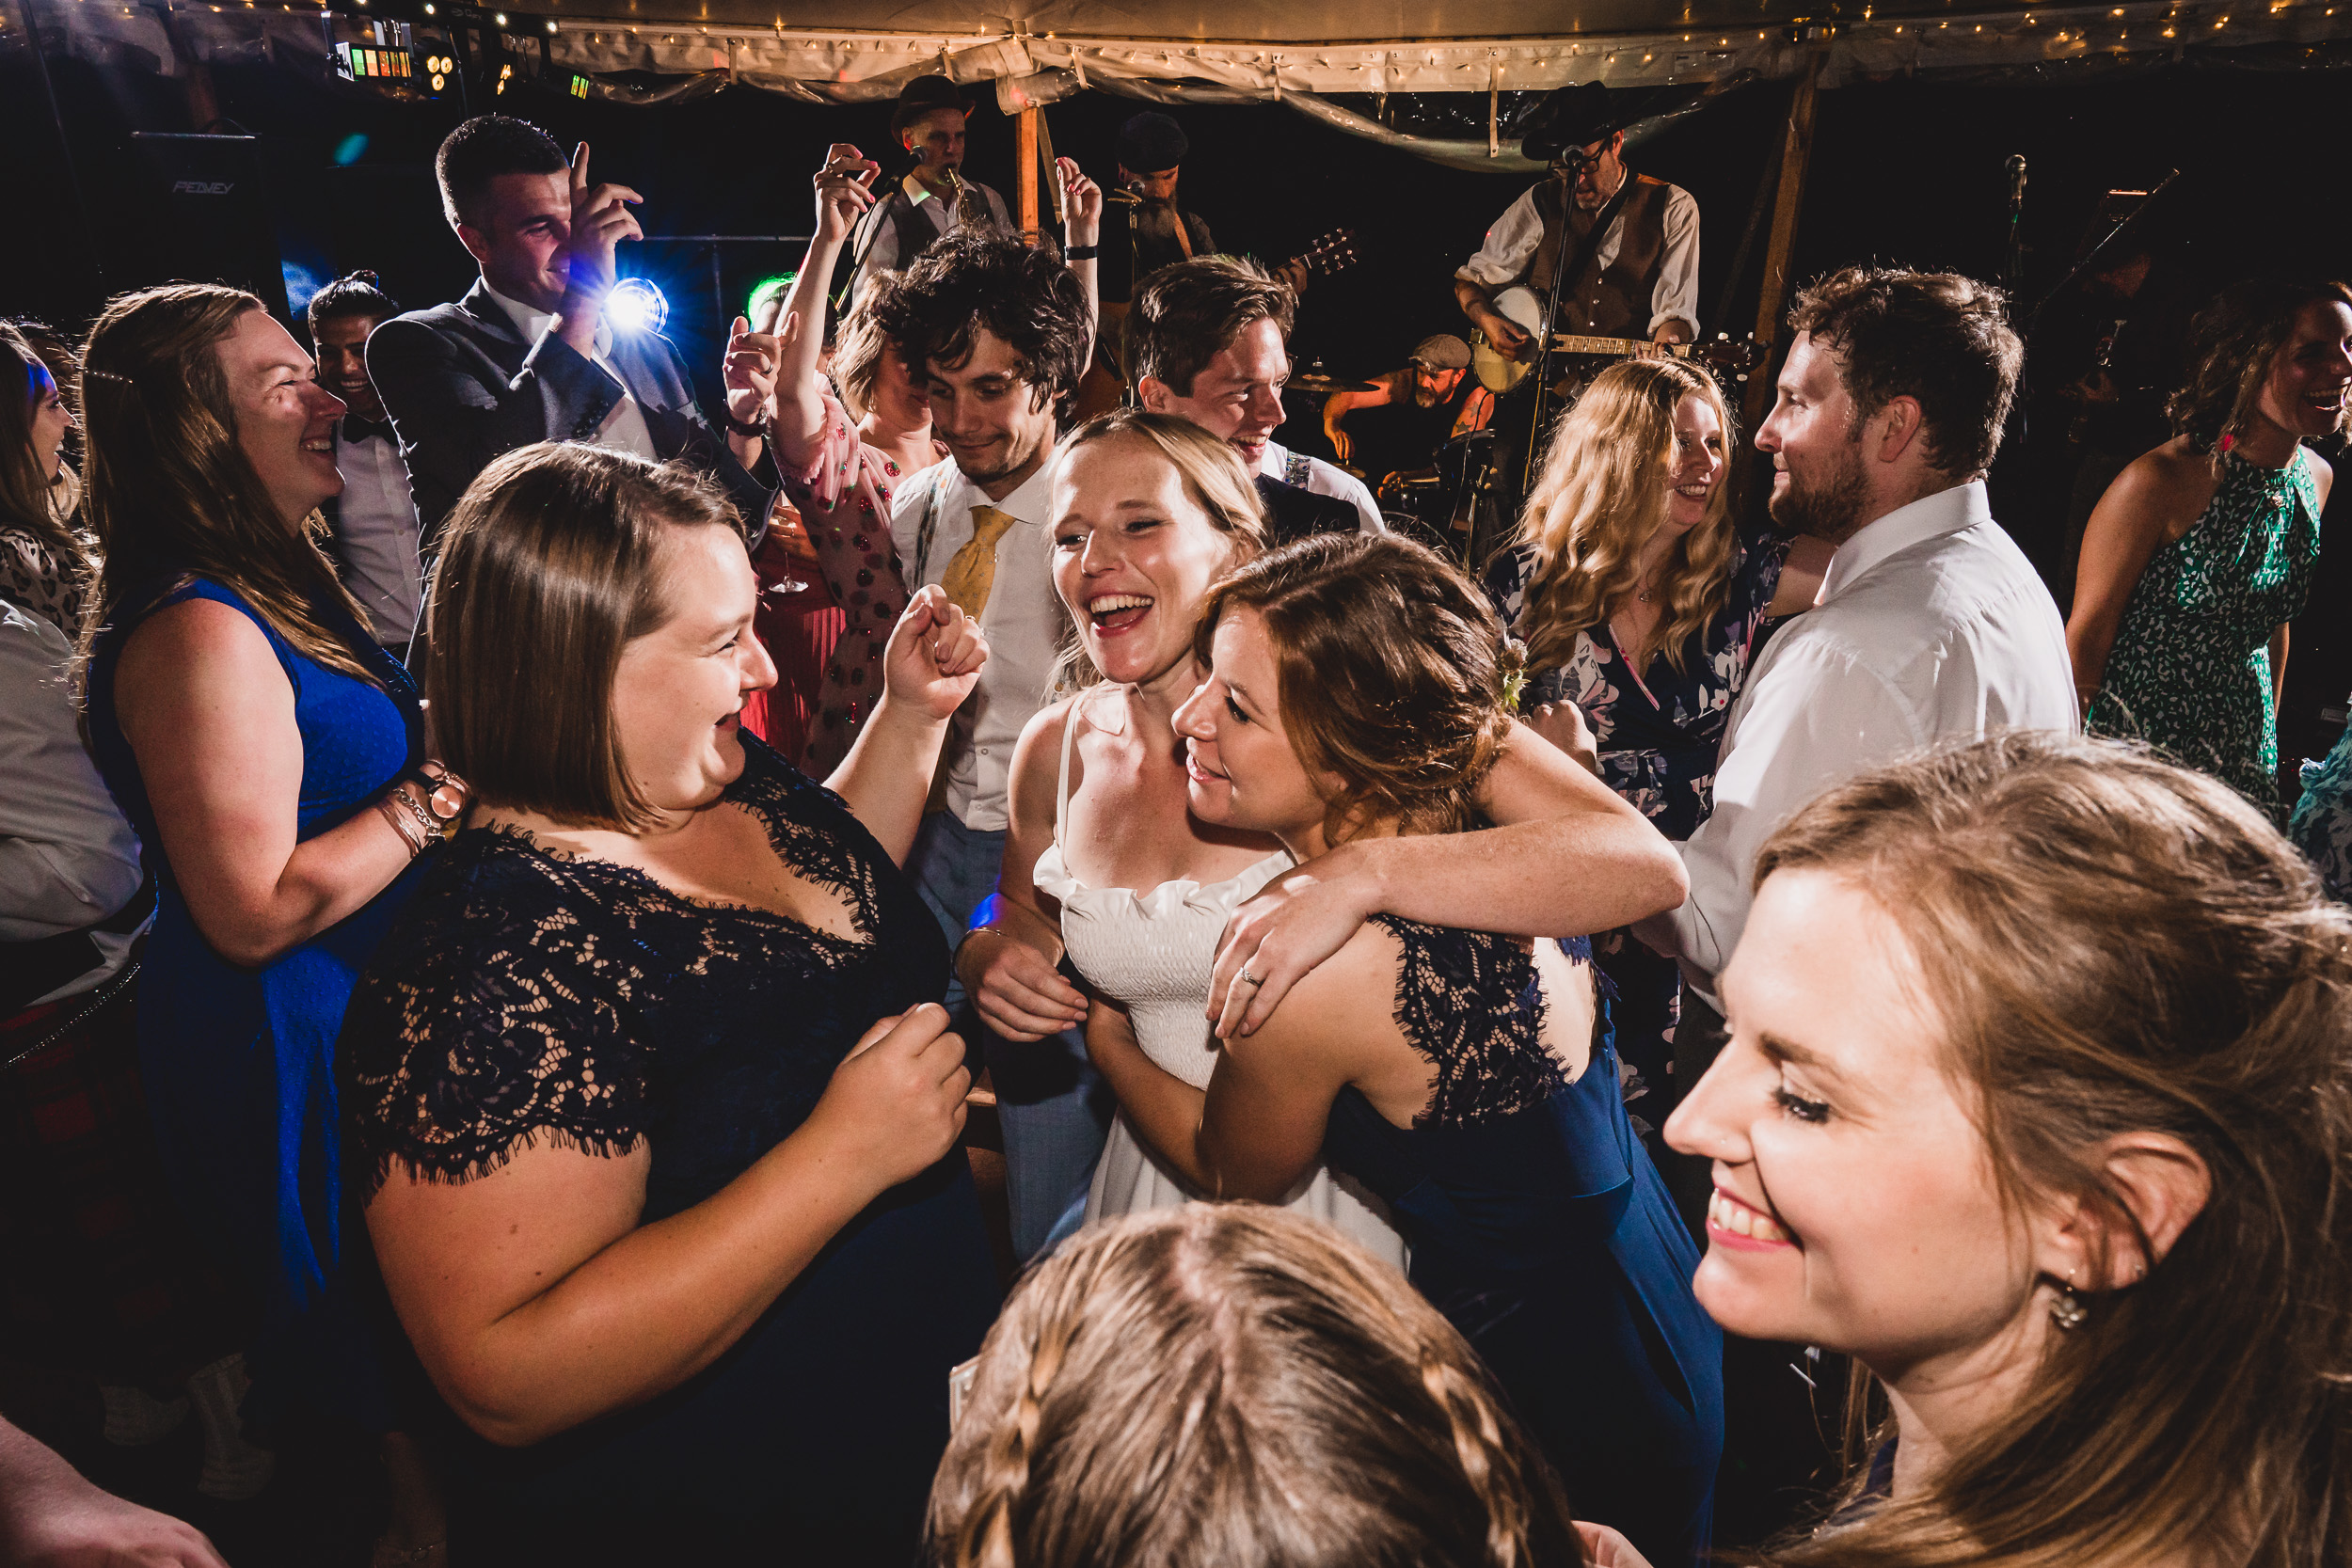 A wedding photographer captures the joyful dances of brides and grooms at a reception.